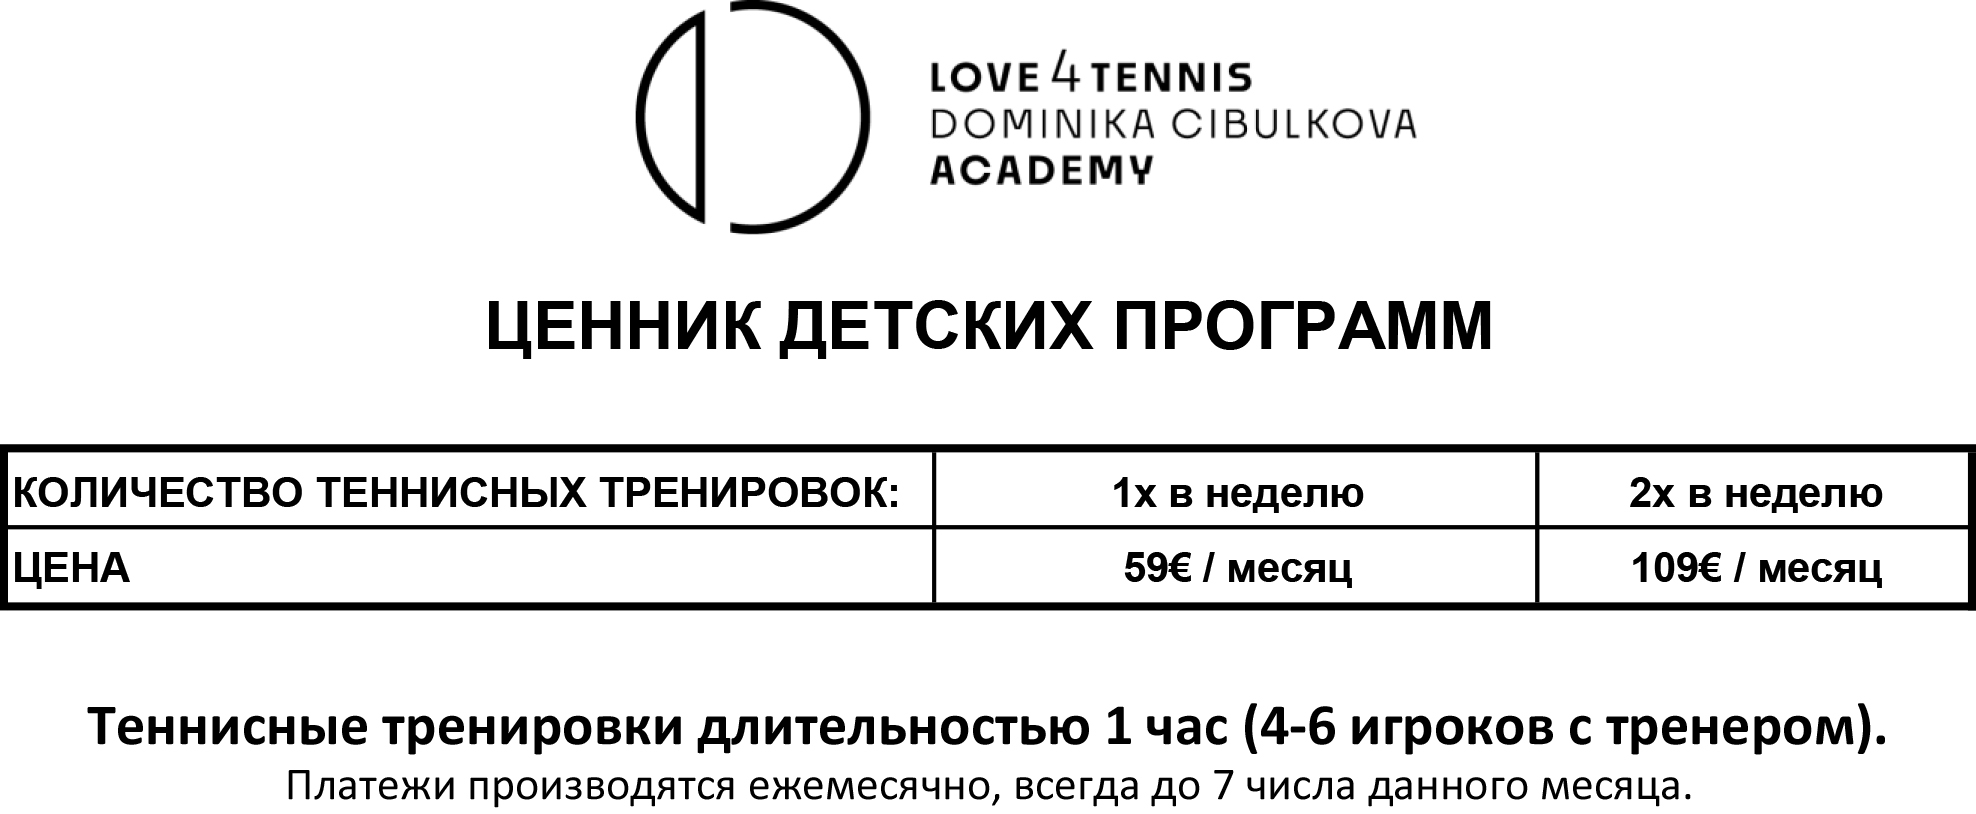 Price-list-academy-KIDS---RUS